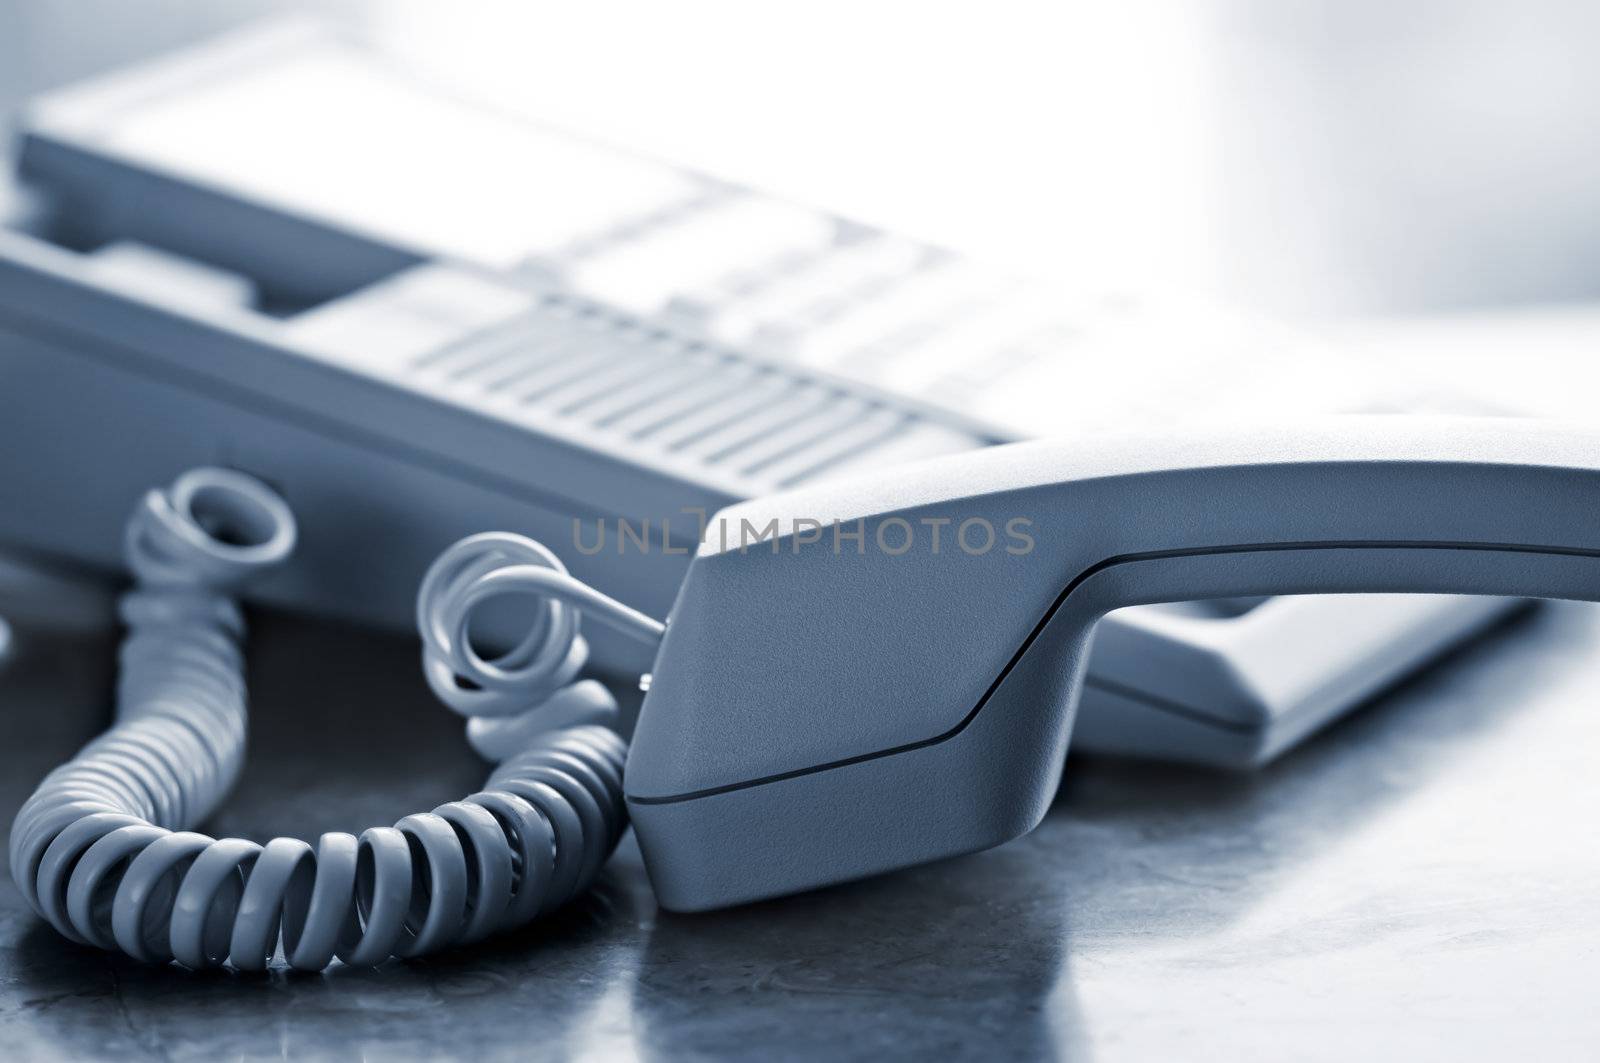 Desk telephone off hook by elenathewise